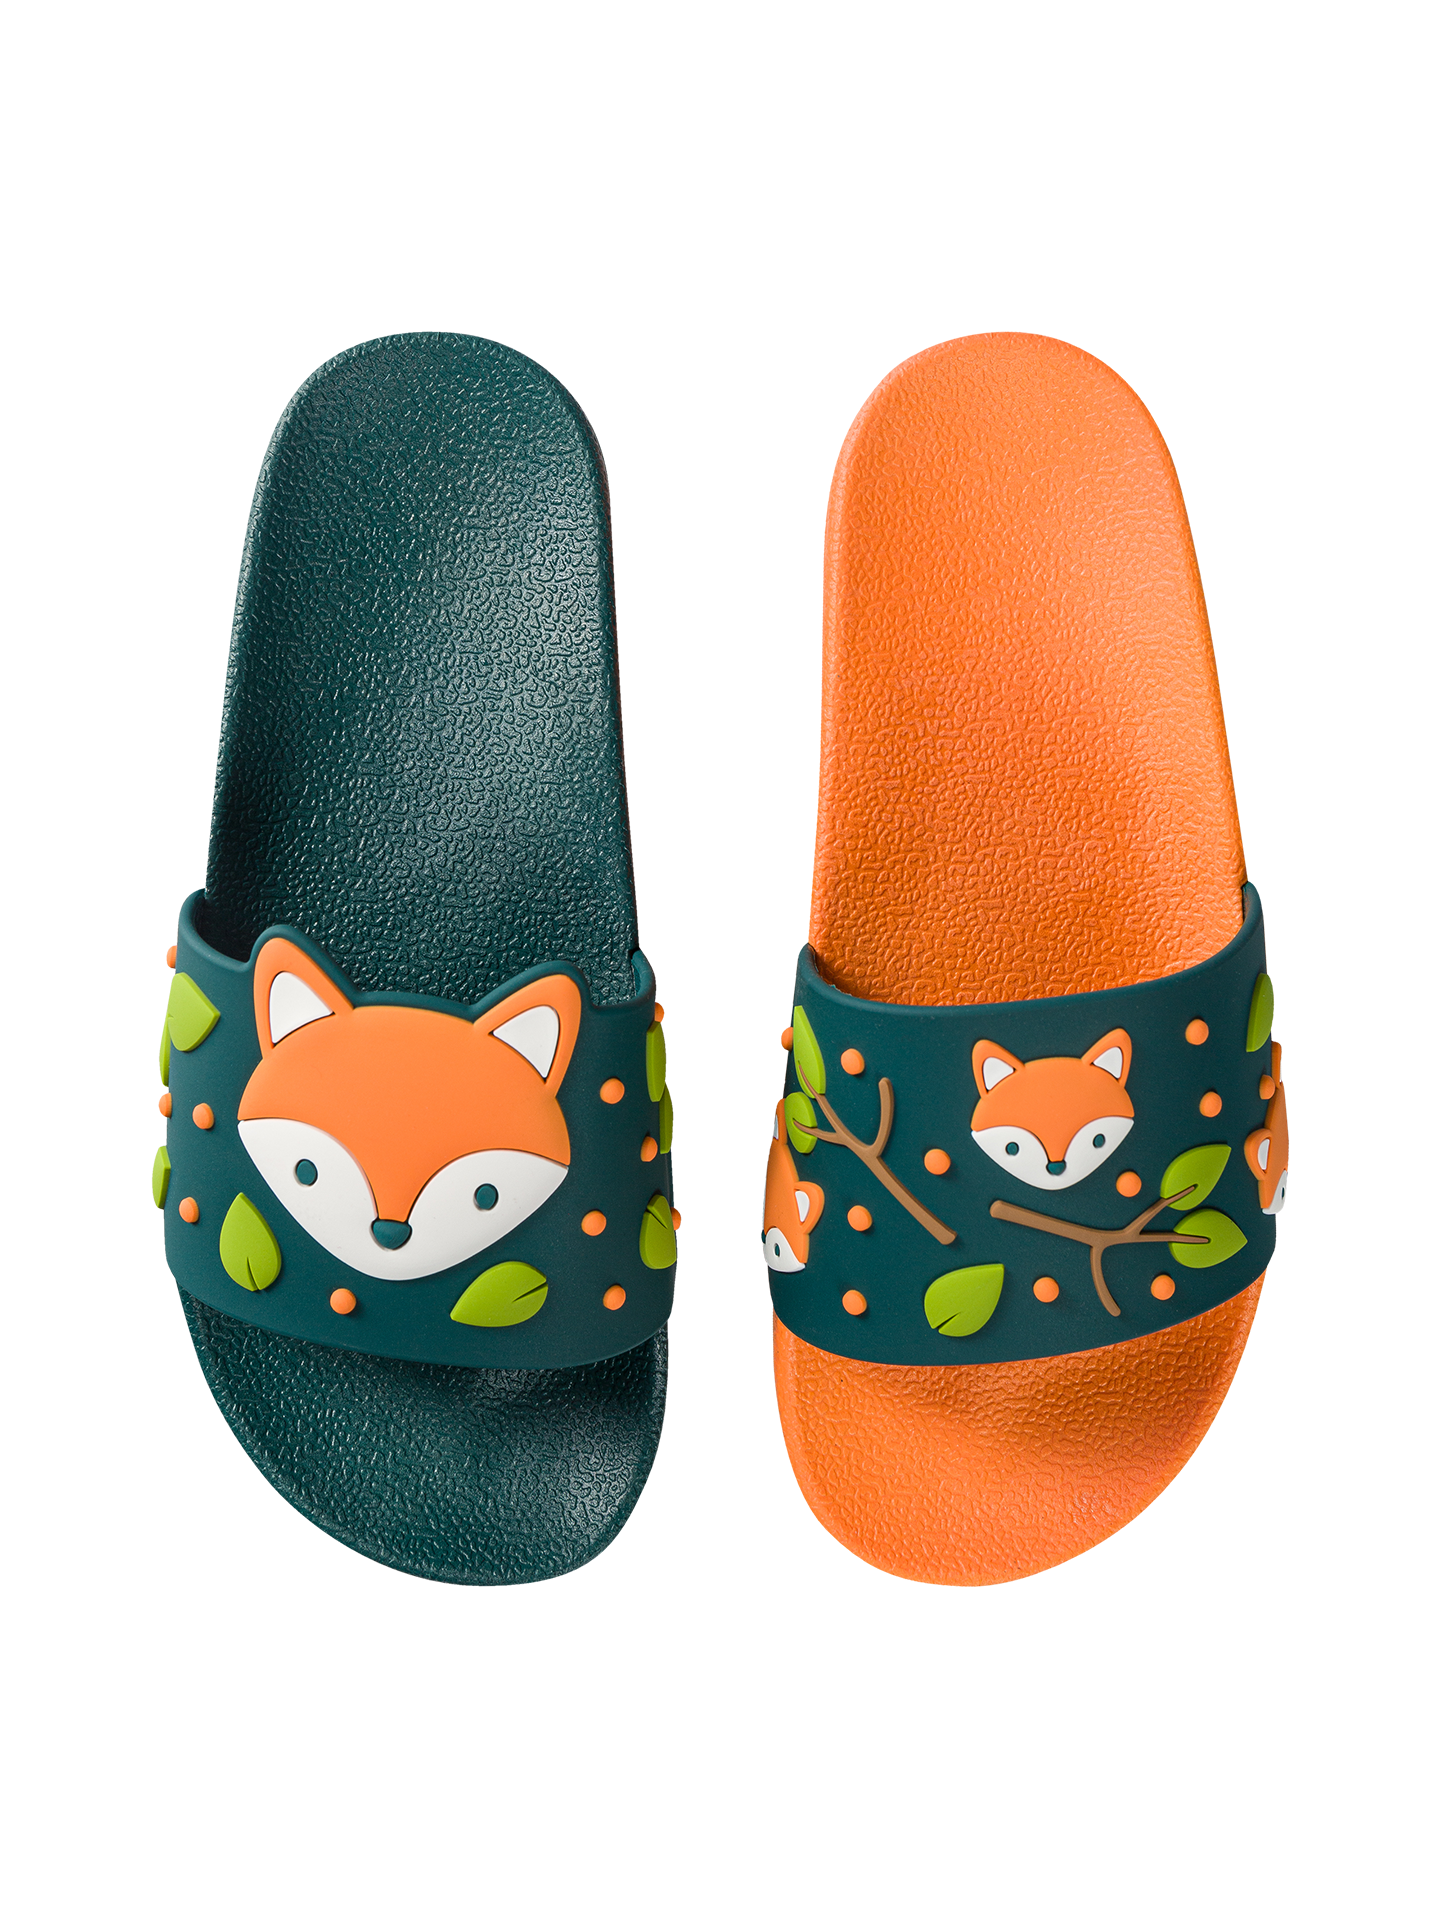 Kids' Slides Little Fox